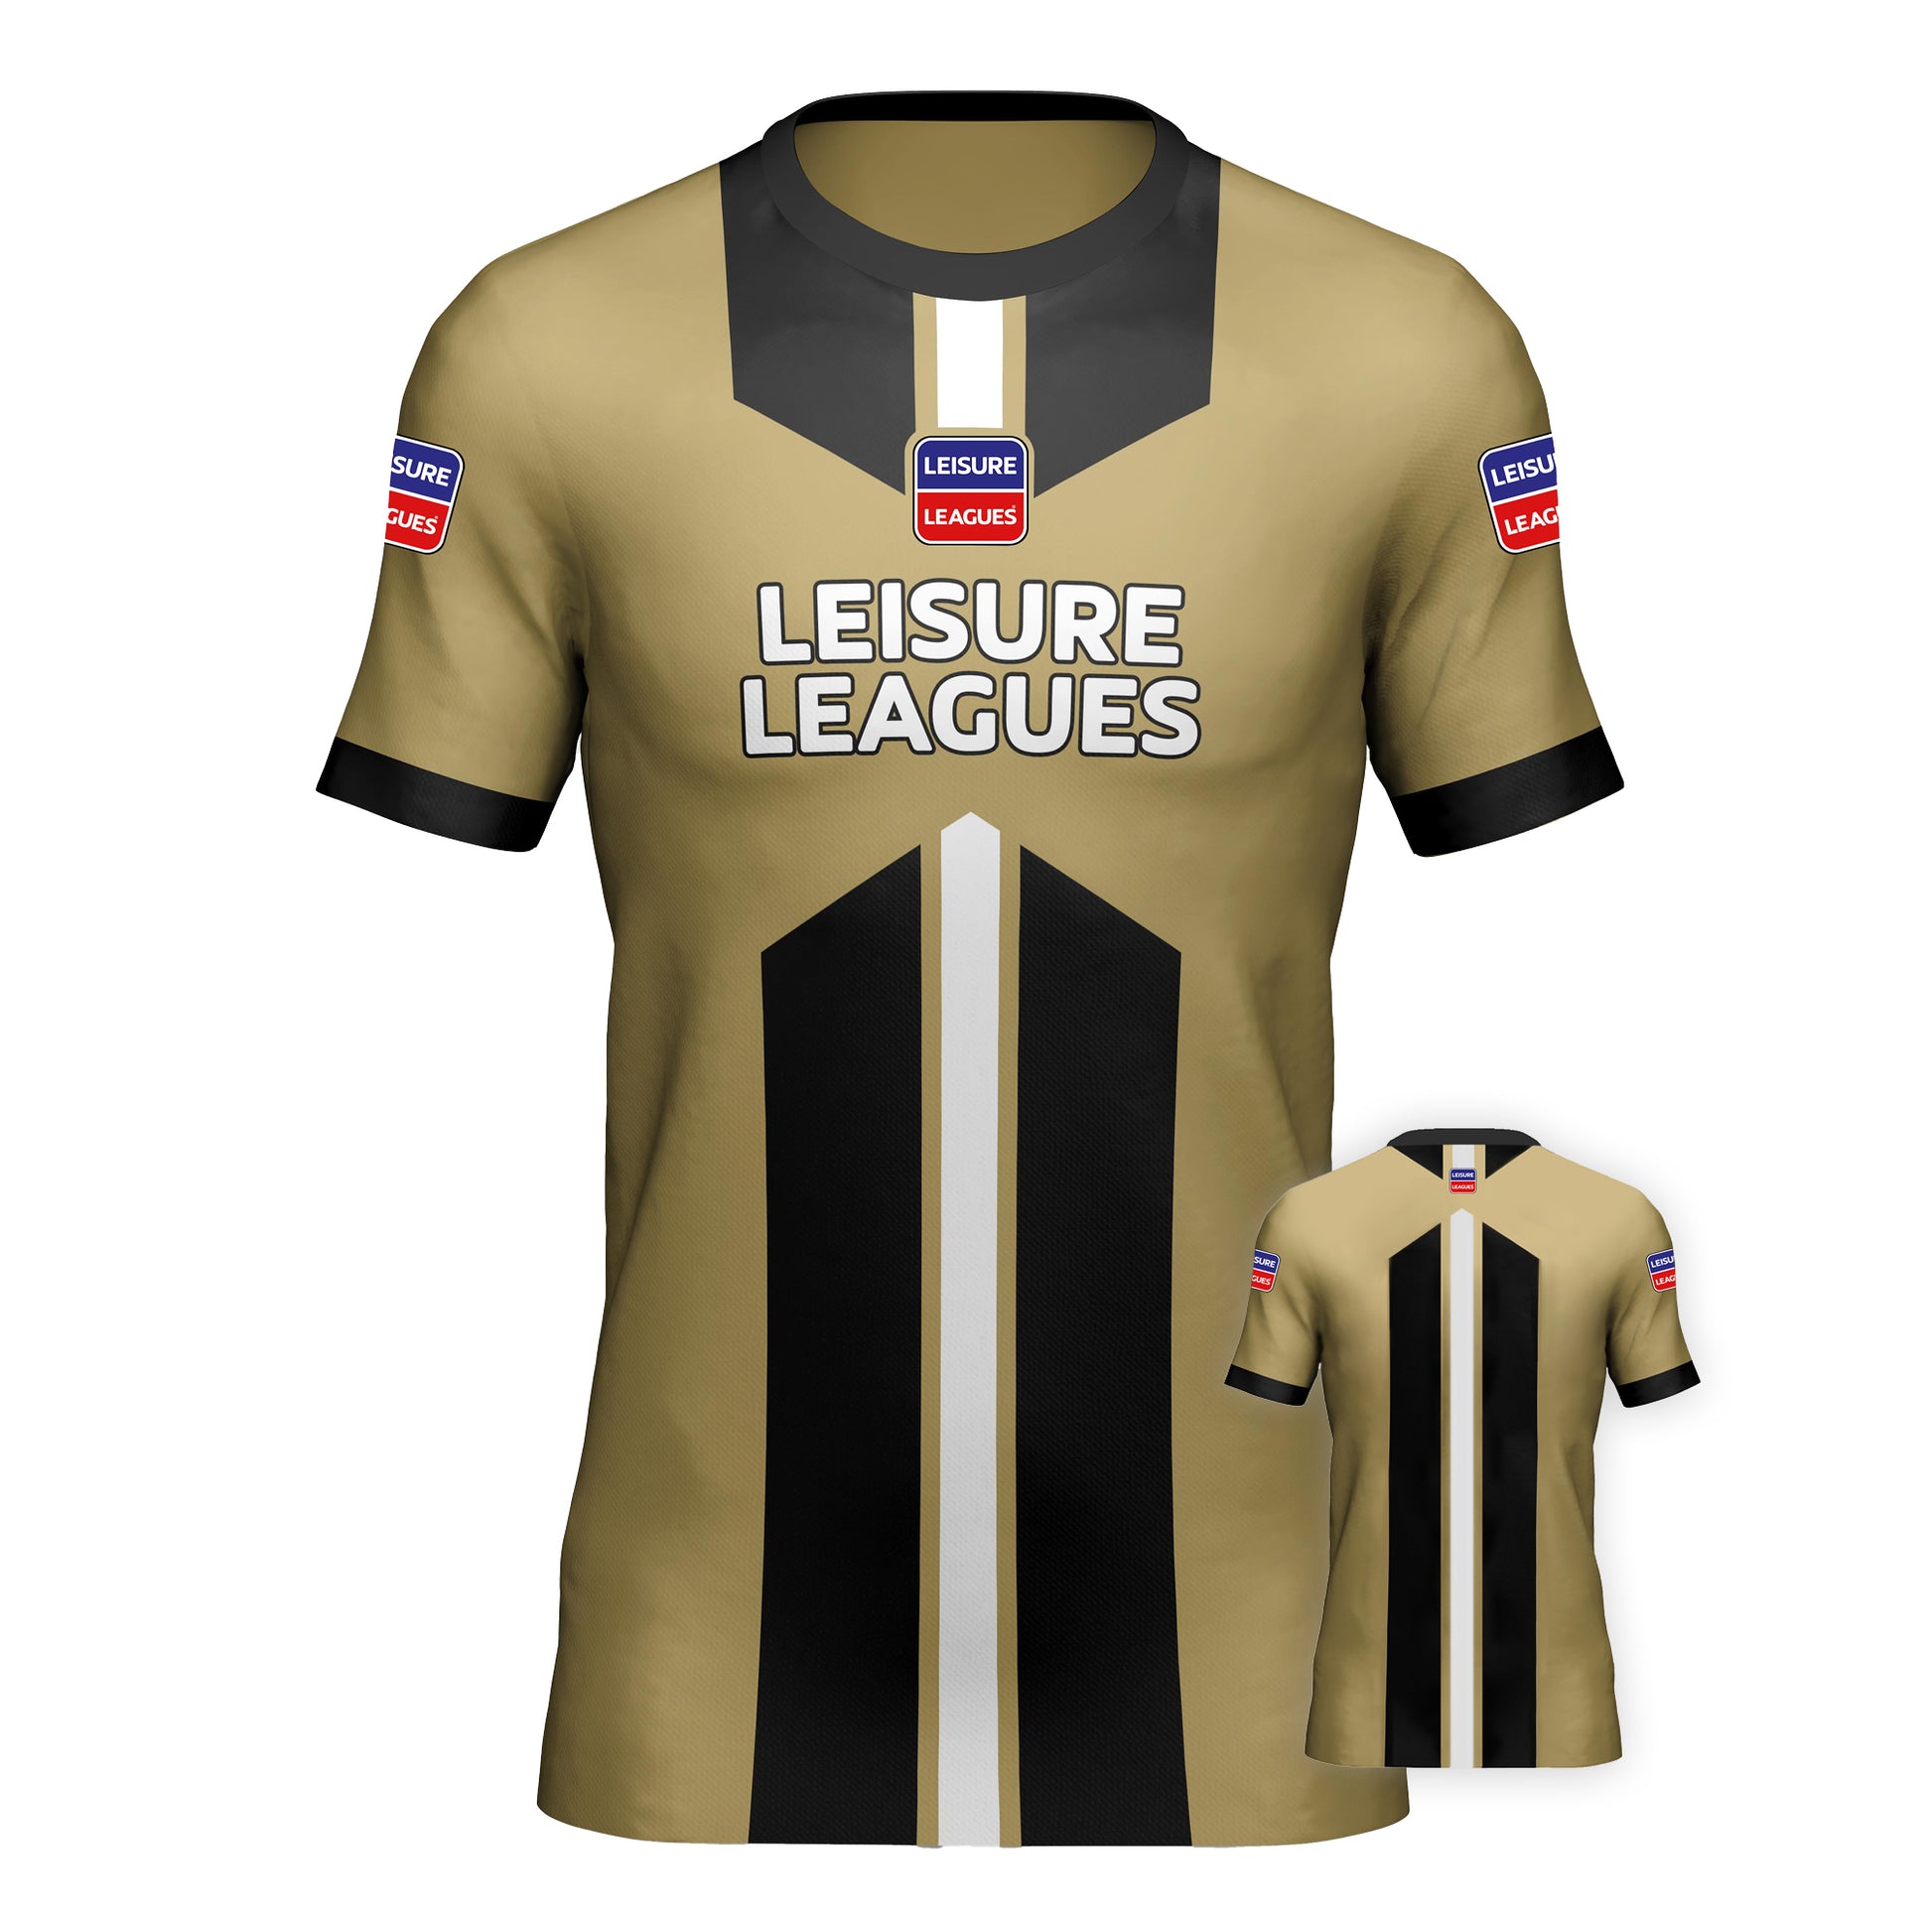 Football Shirt Leisure Leagues Kit Team Tshirt Bronze